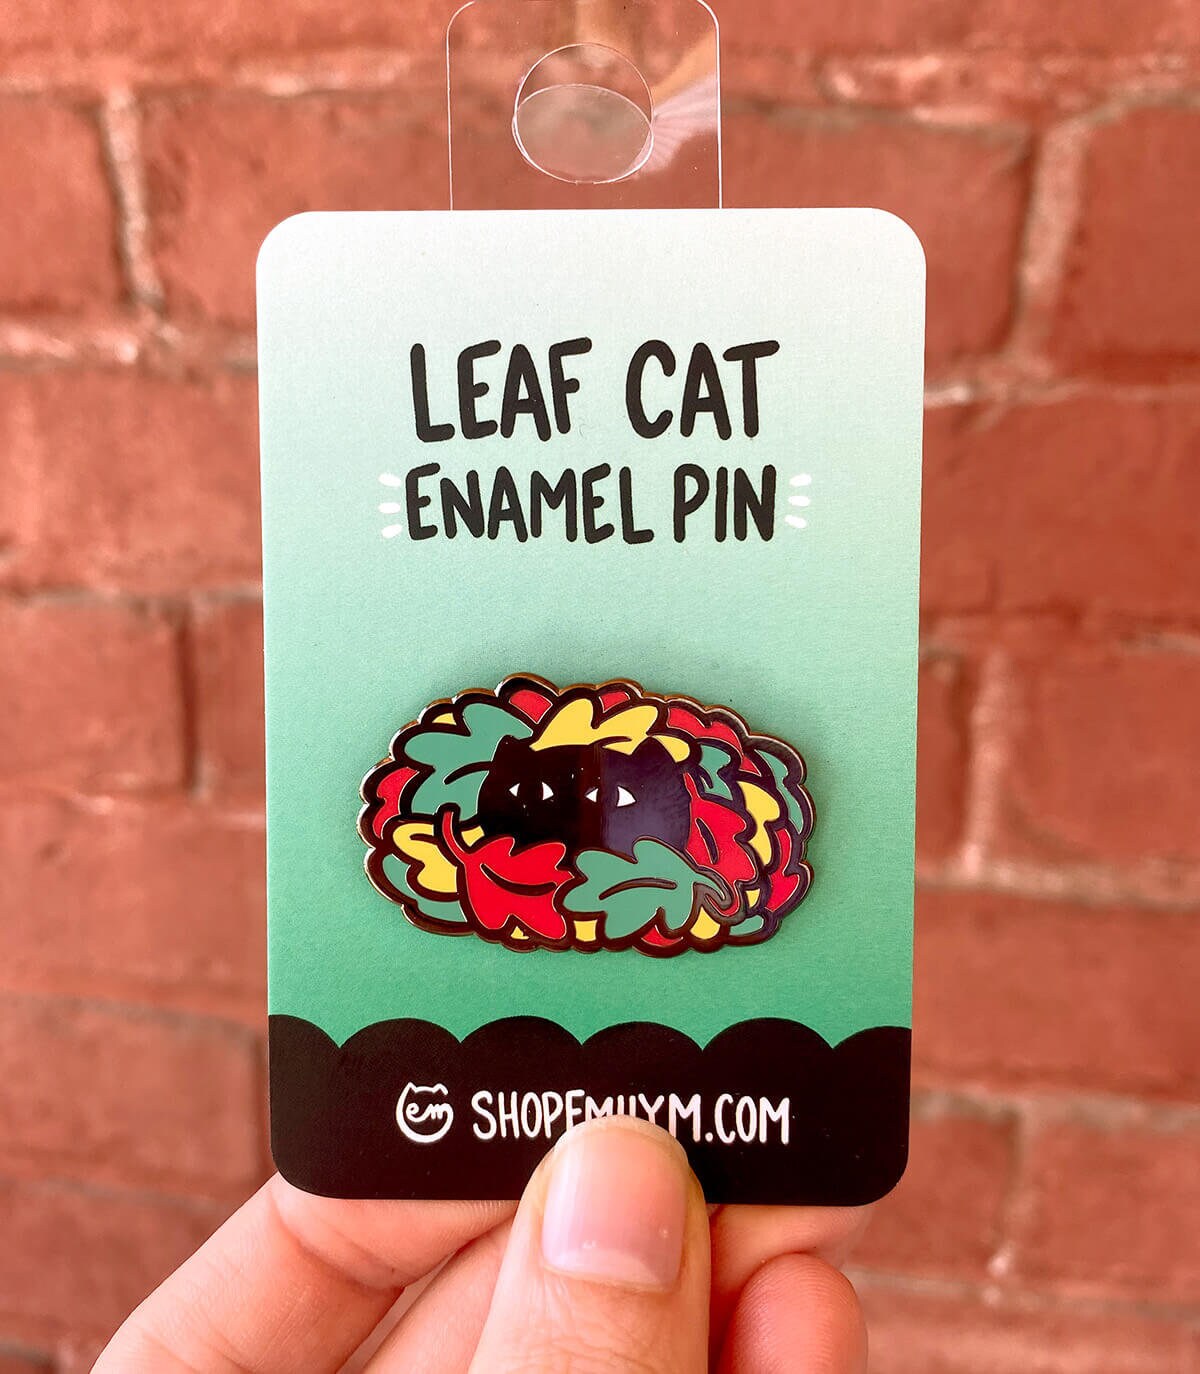 Leaf Cat Enamel Pin